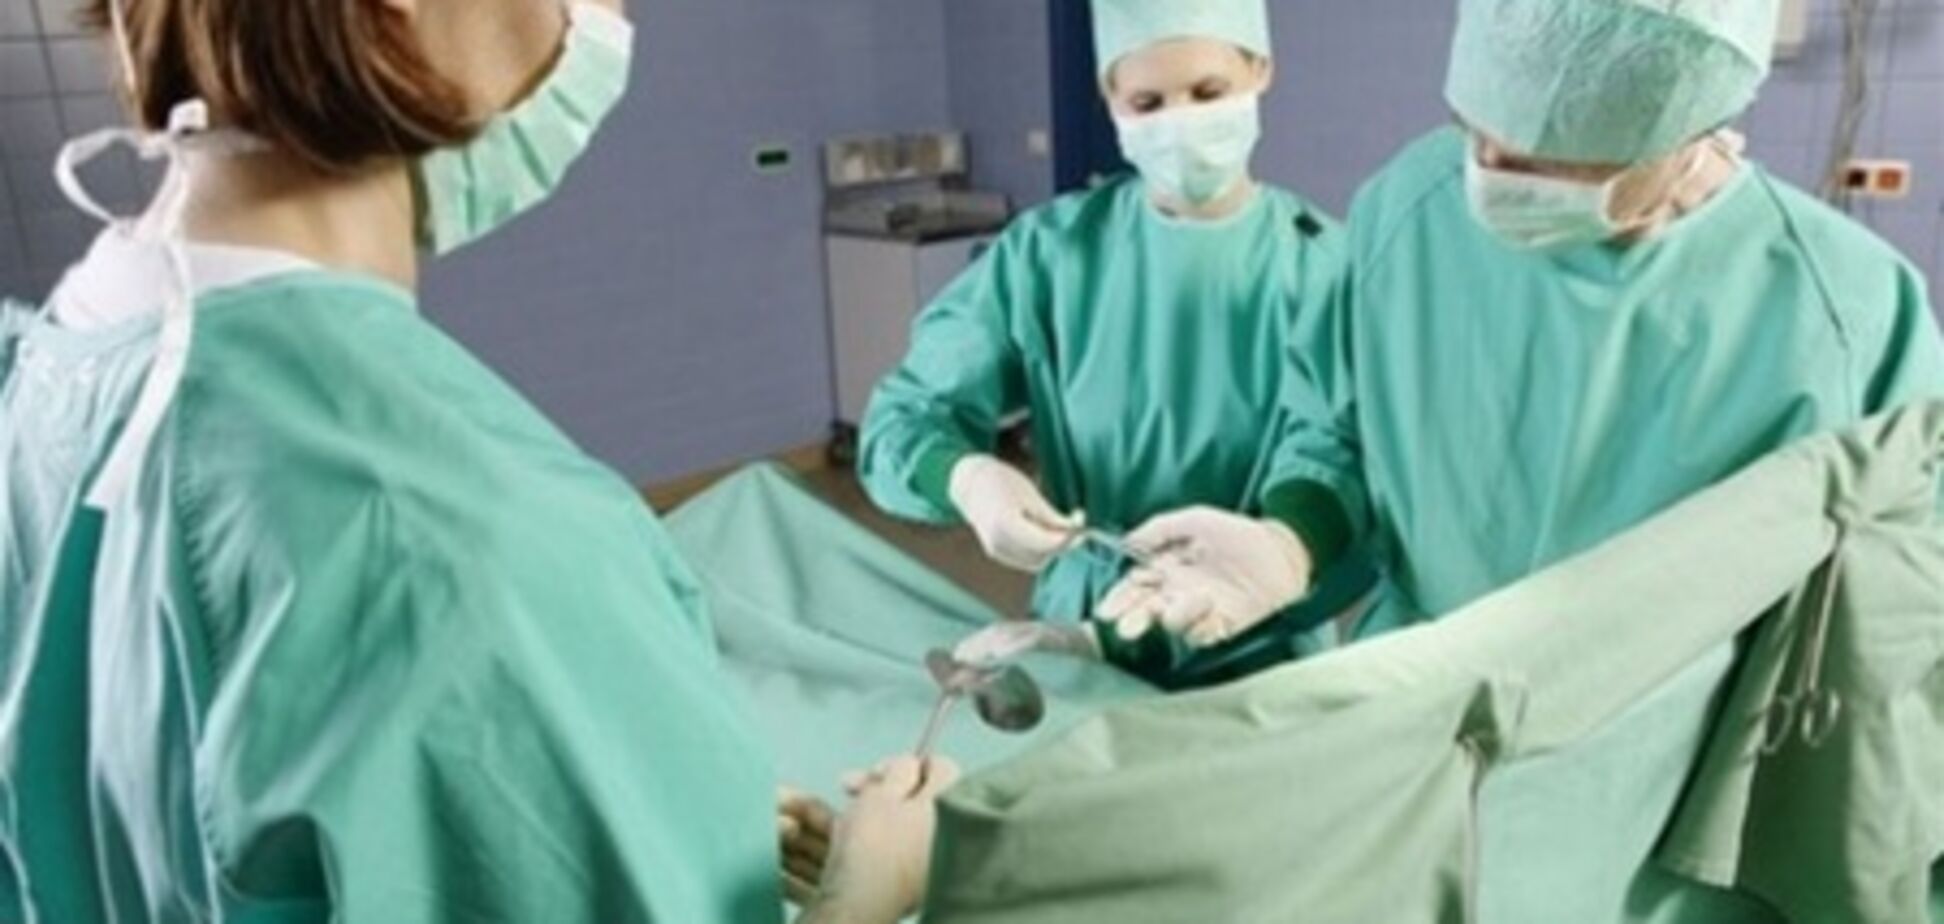 На Донеччине хирурги забыли металлический зажим в животе пациента, возбуждено дело